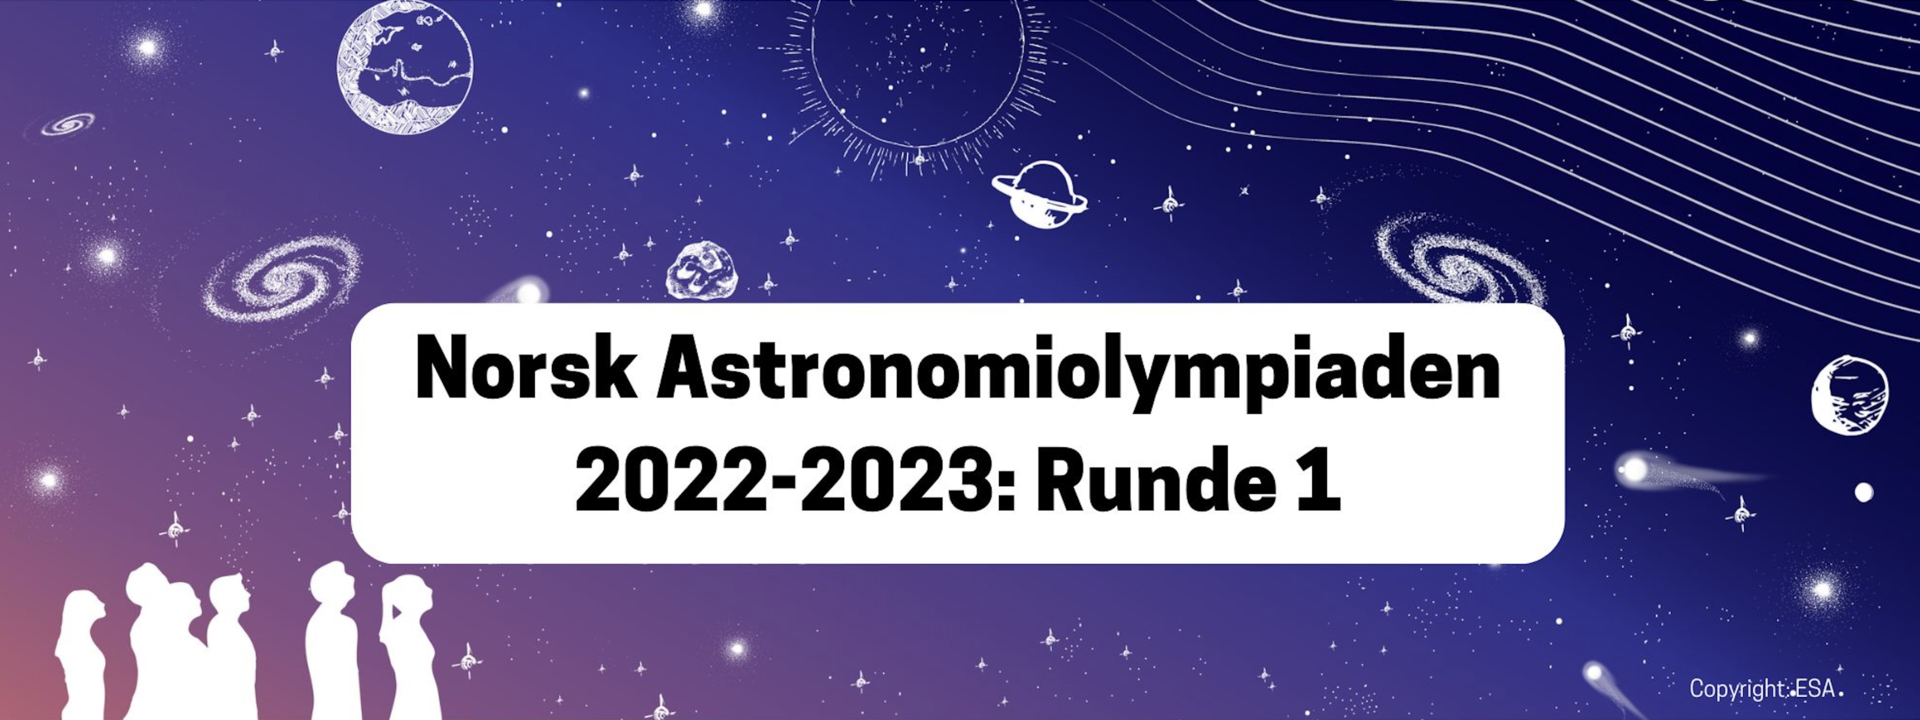 tekst som sier "Norsk Astronomiollympade. Resultatet runde 1"